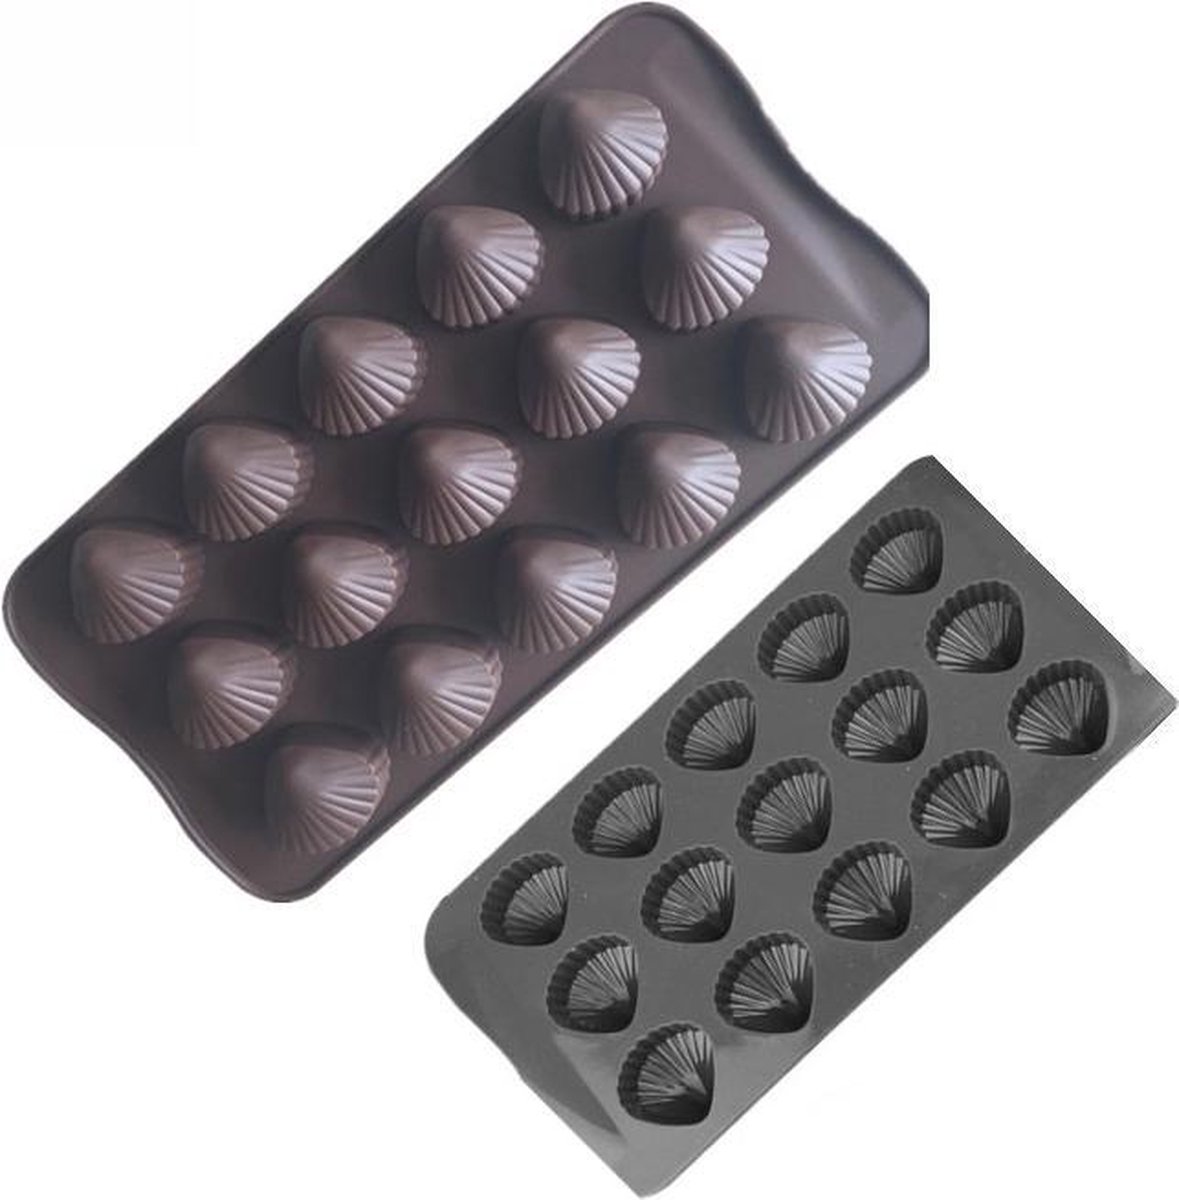 ProductGoods - Siliconen Bakvorm - Chocoladevorm - Bonbonvorm - 15 stuks - Schelpenvorm - Bakvormen